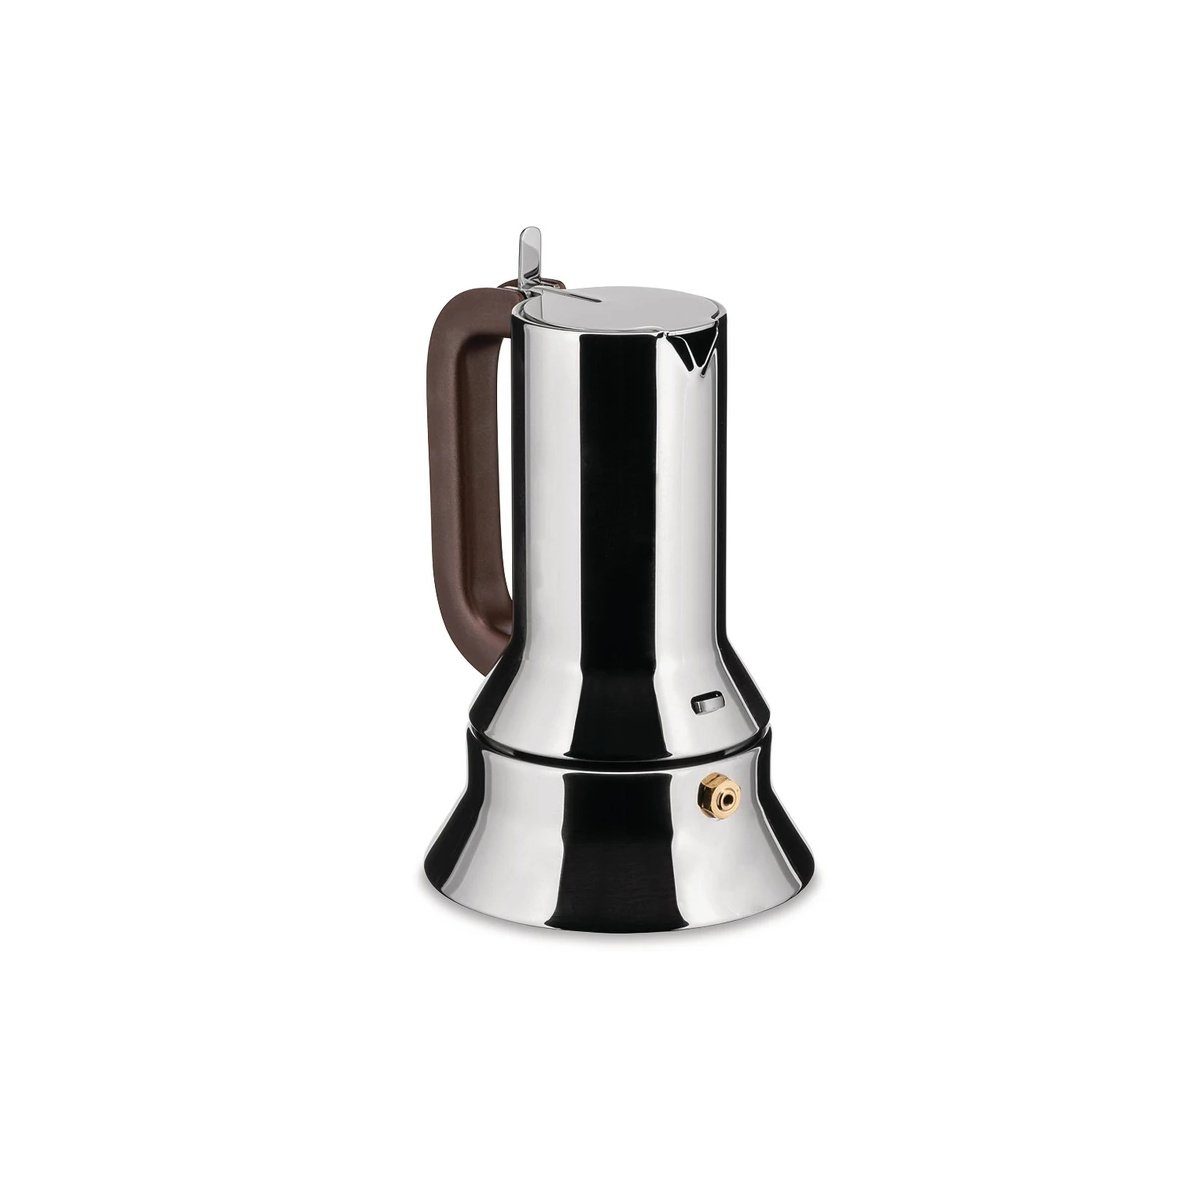 SAPPER Tassen 30cl, Für Espressokocher 0.3l Alessi 3-6 Espressokocher Kaffeekanne, Espresso